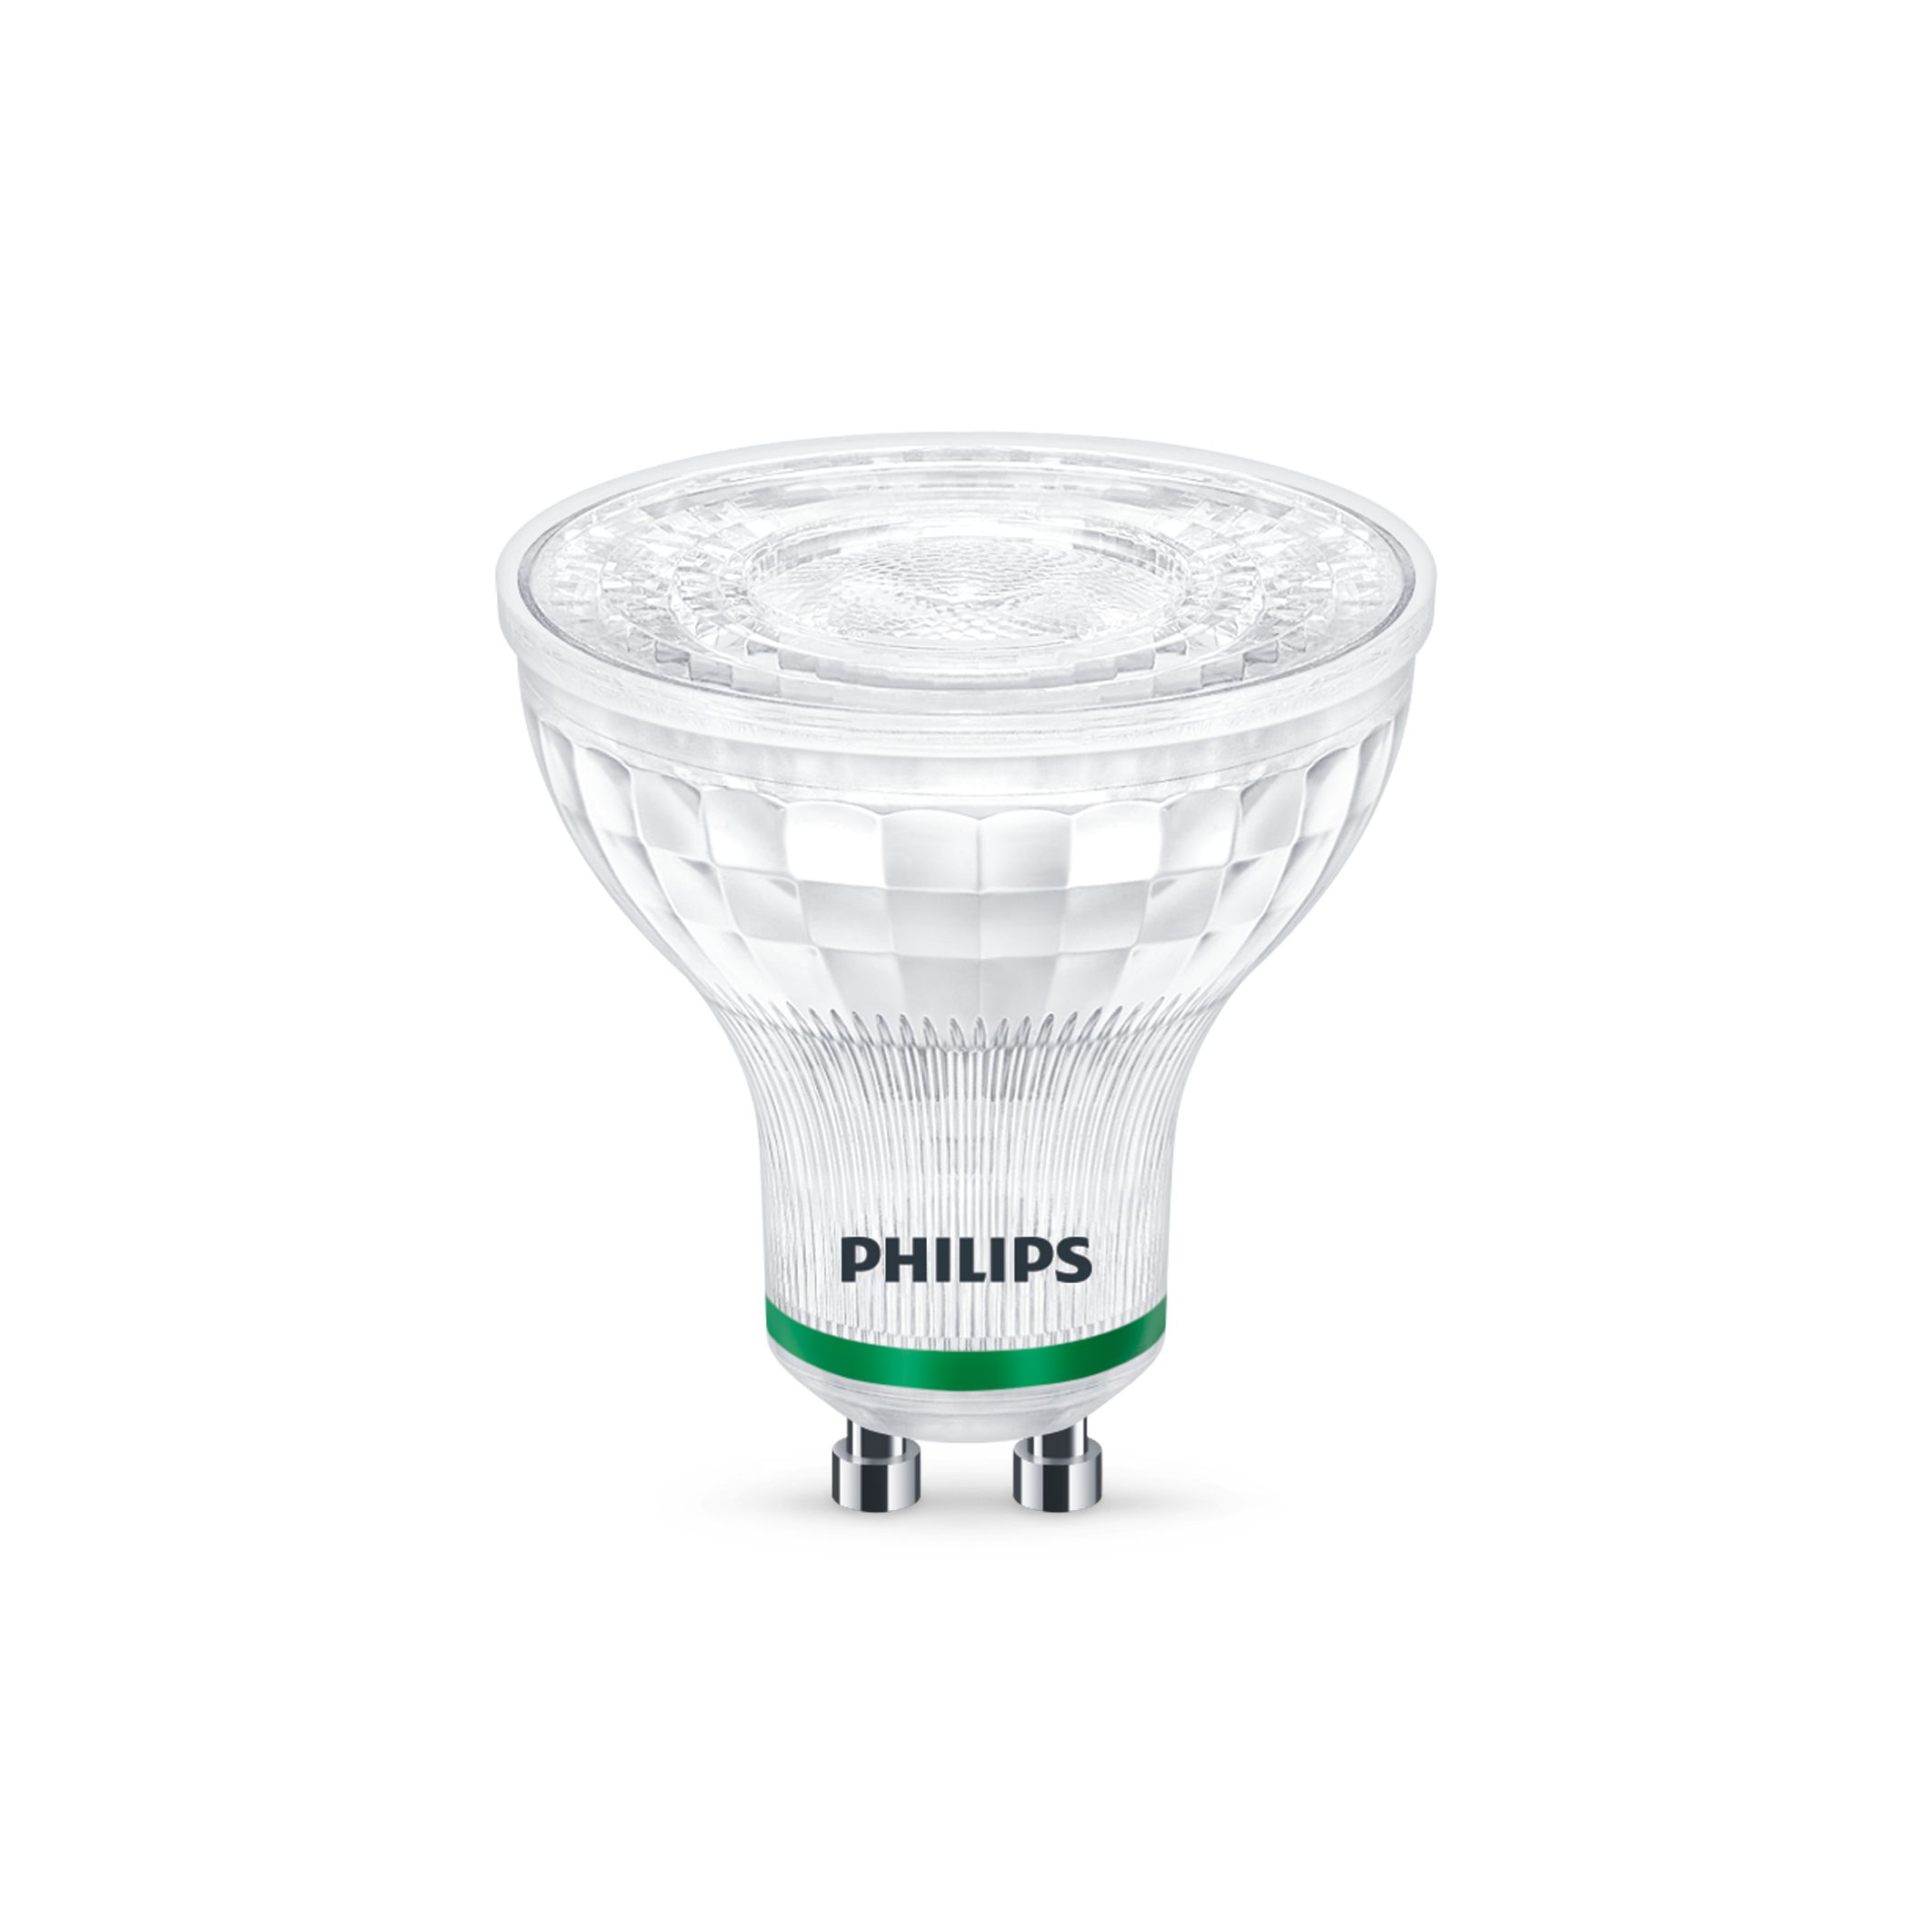 GU10 UltraEfficient | 9224009 Philips lighting